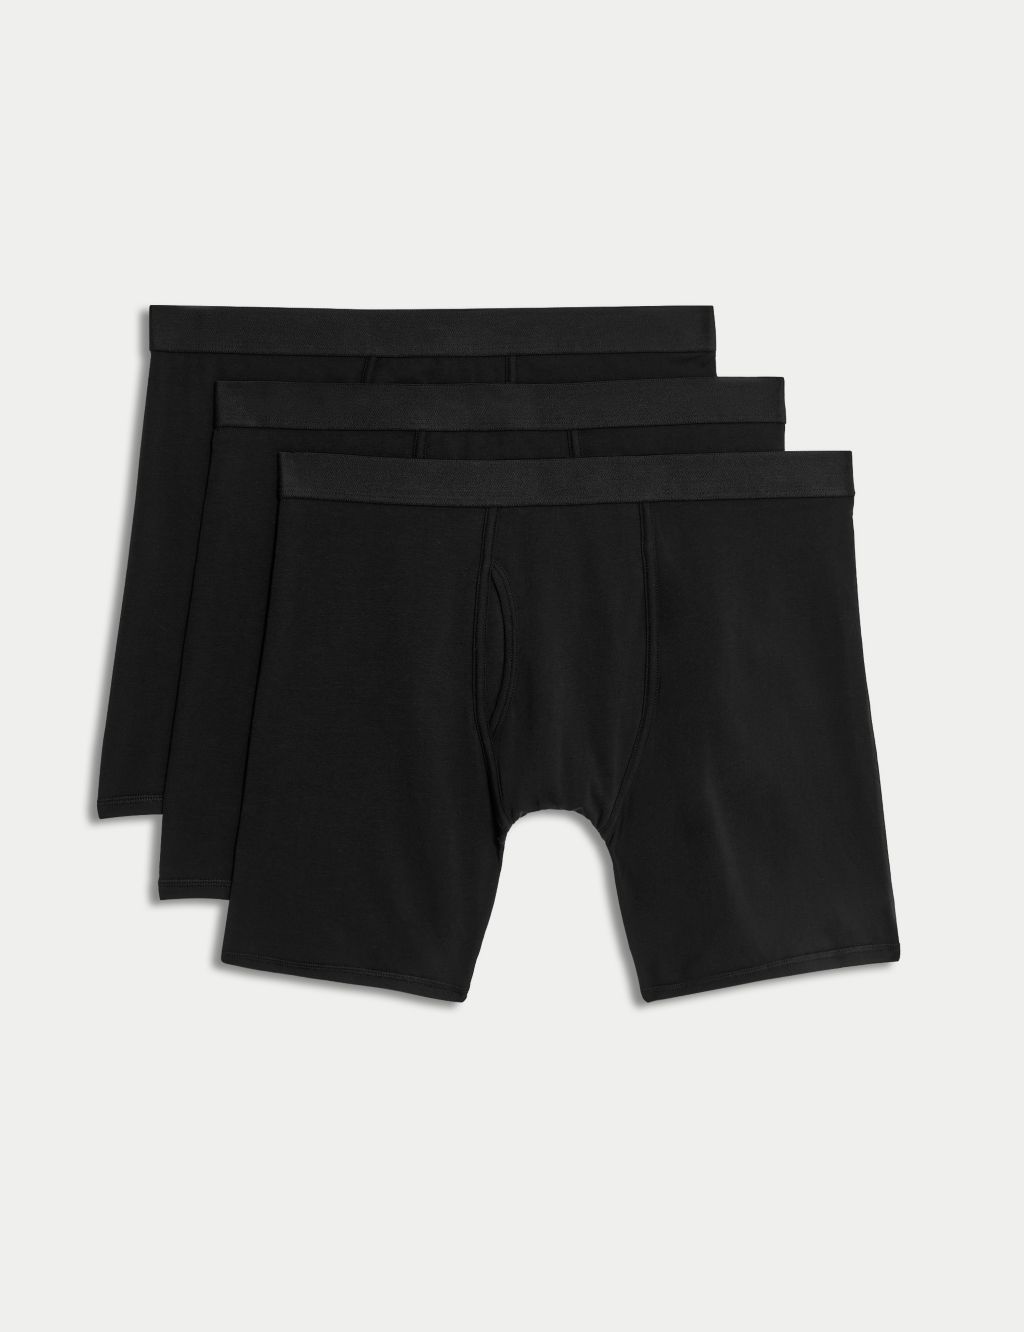 Brilliant Basics Men's Active Long Trunk - Black - Size XL